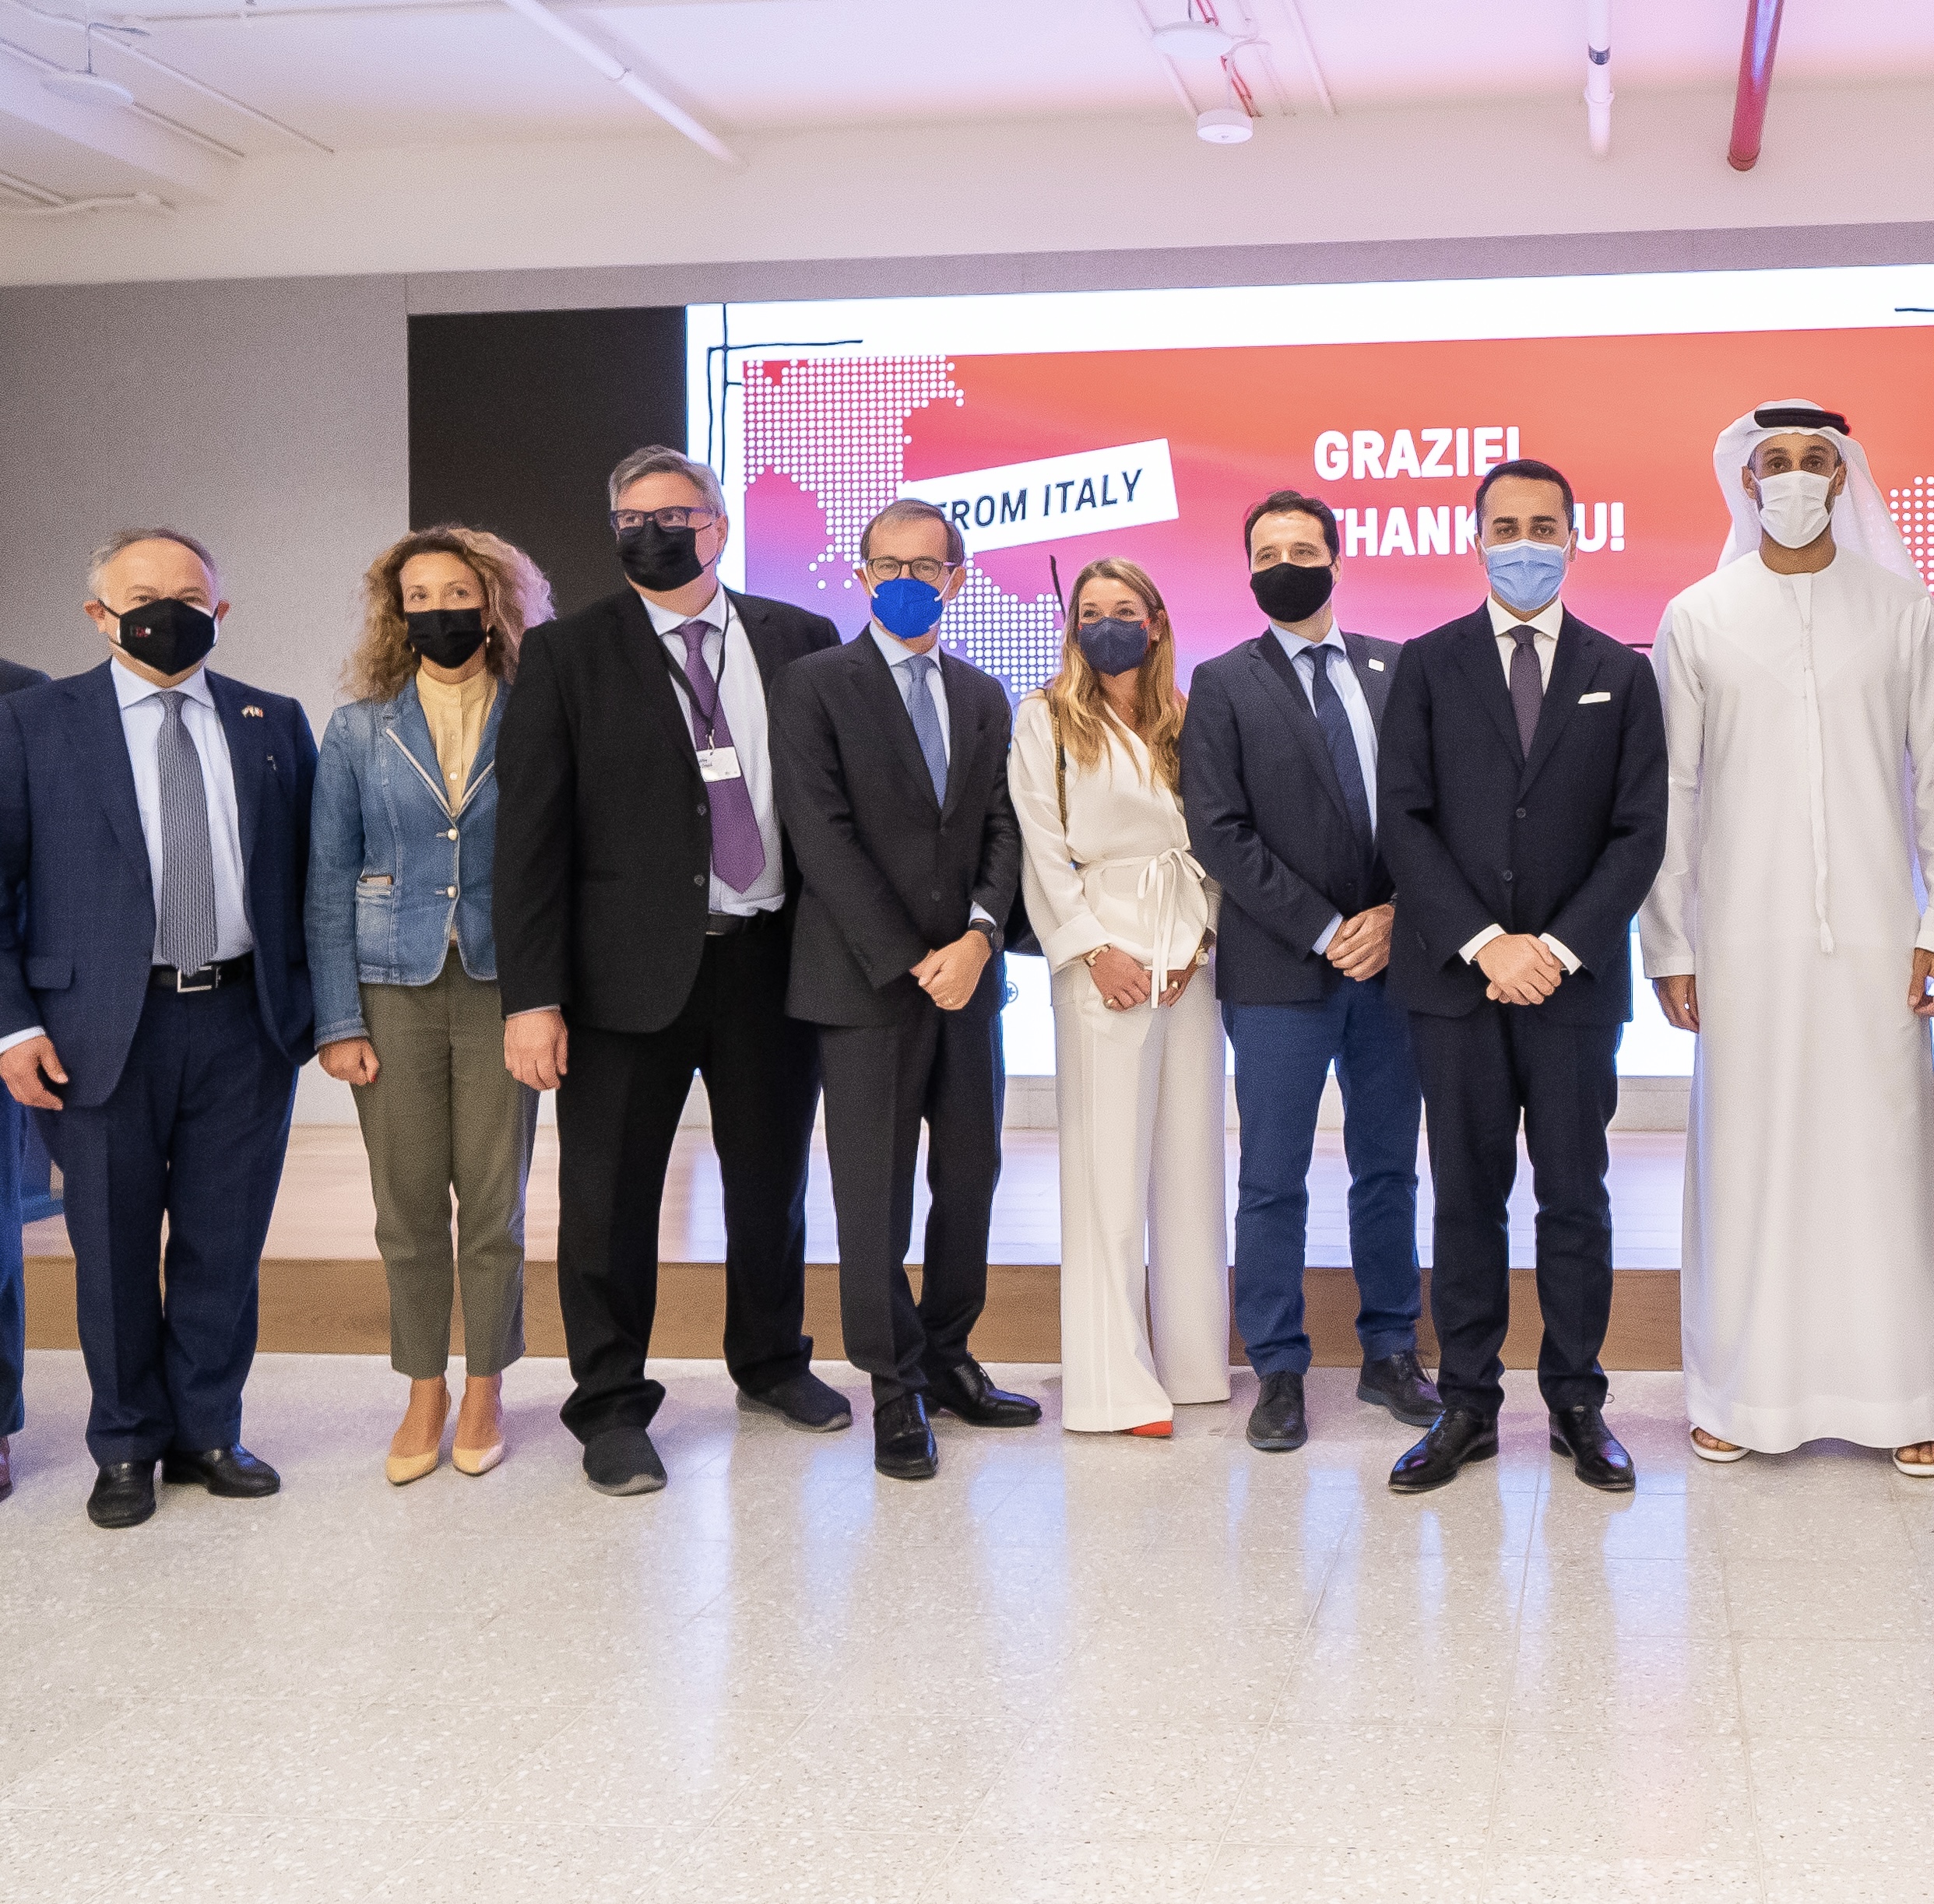 BioPic among 11 Italian companies in Dubai as part of Global Start Up Program